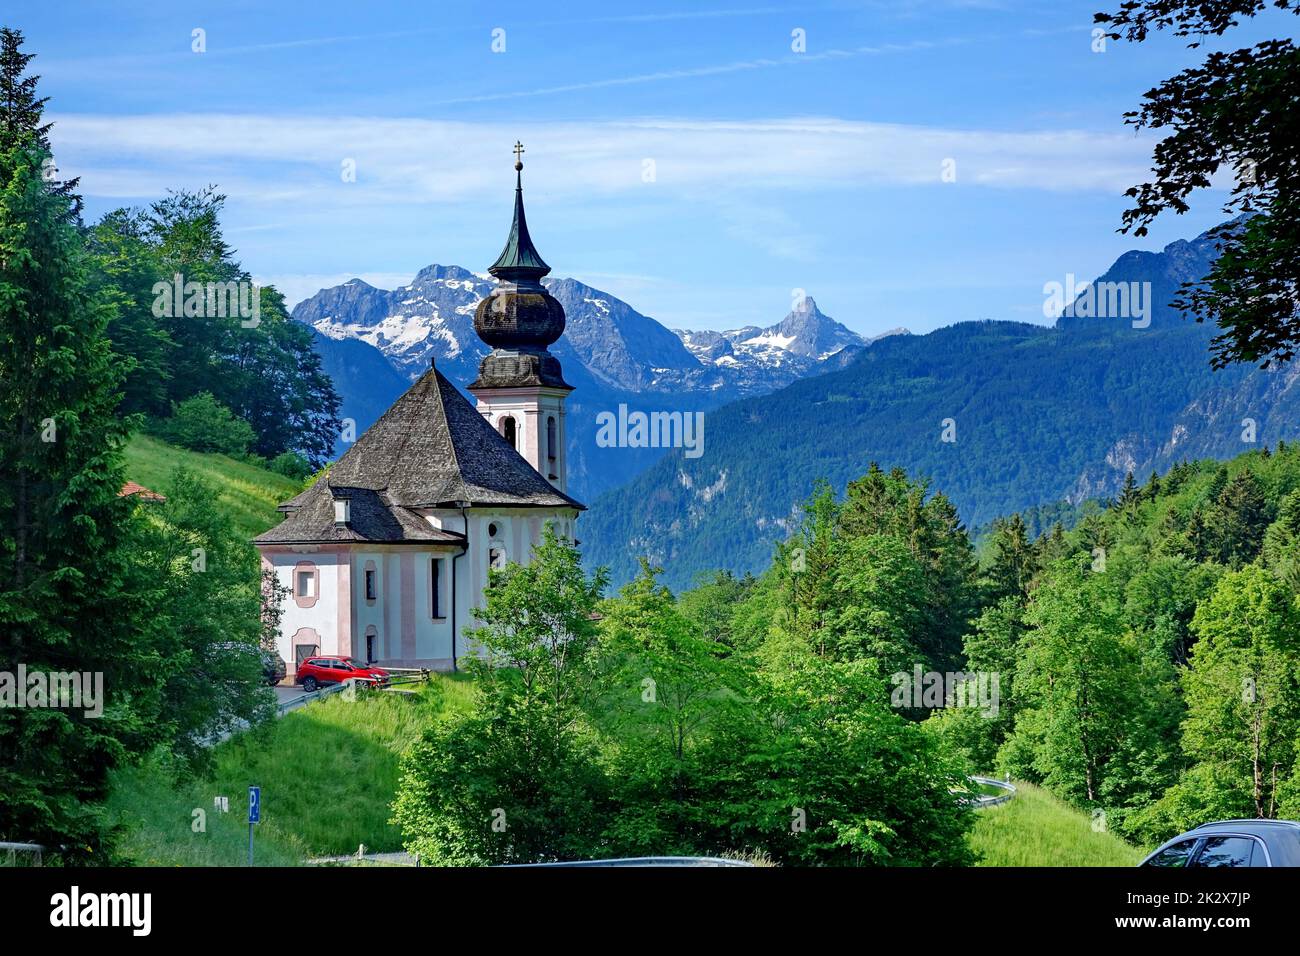 Germany, Bavaria, Landkreis Berchtesgaden, Berchtesgadener Alpen, Pilgrimage Church of Maria Gern, Hagen mountains, Steinernes Meer mountains Stock Photo